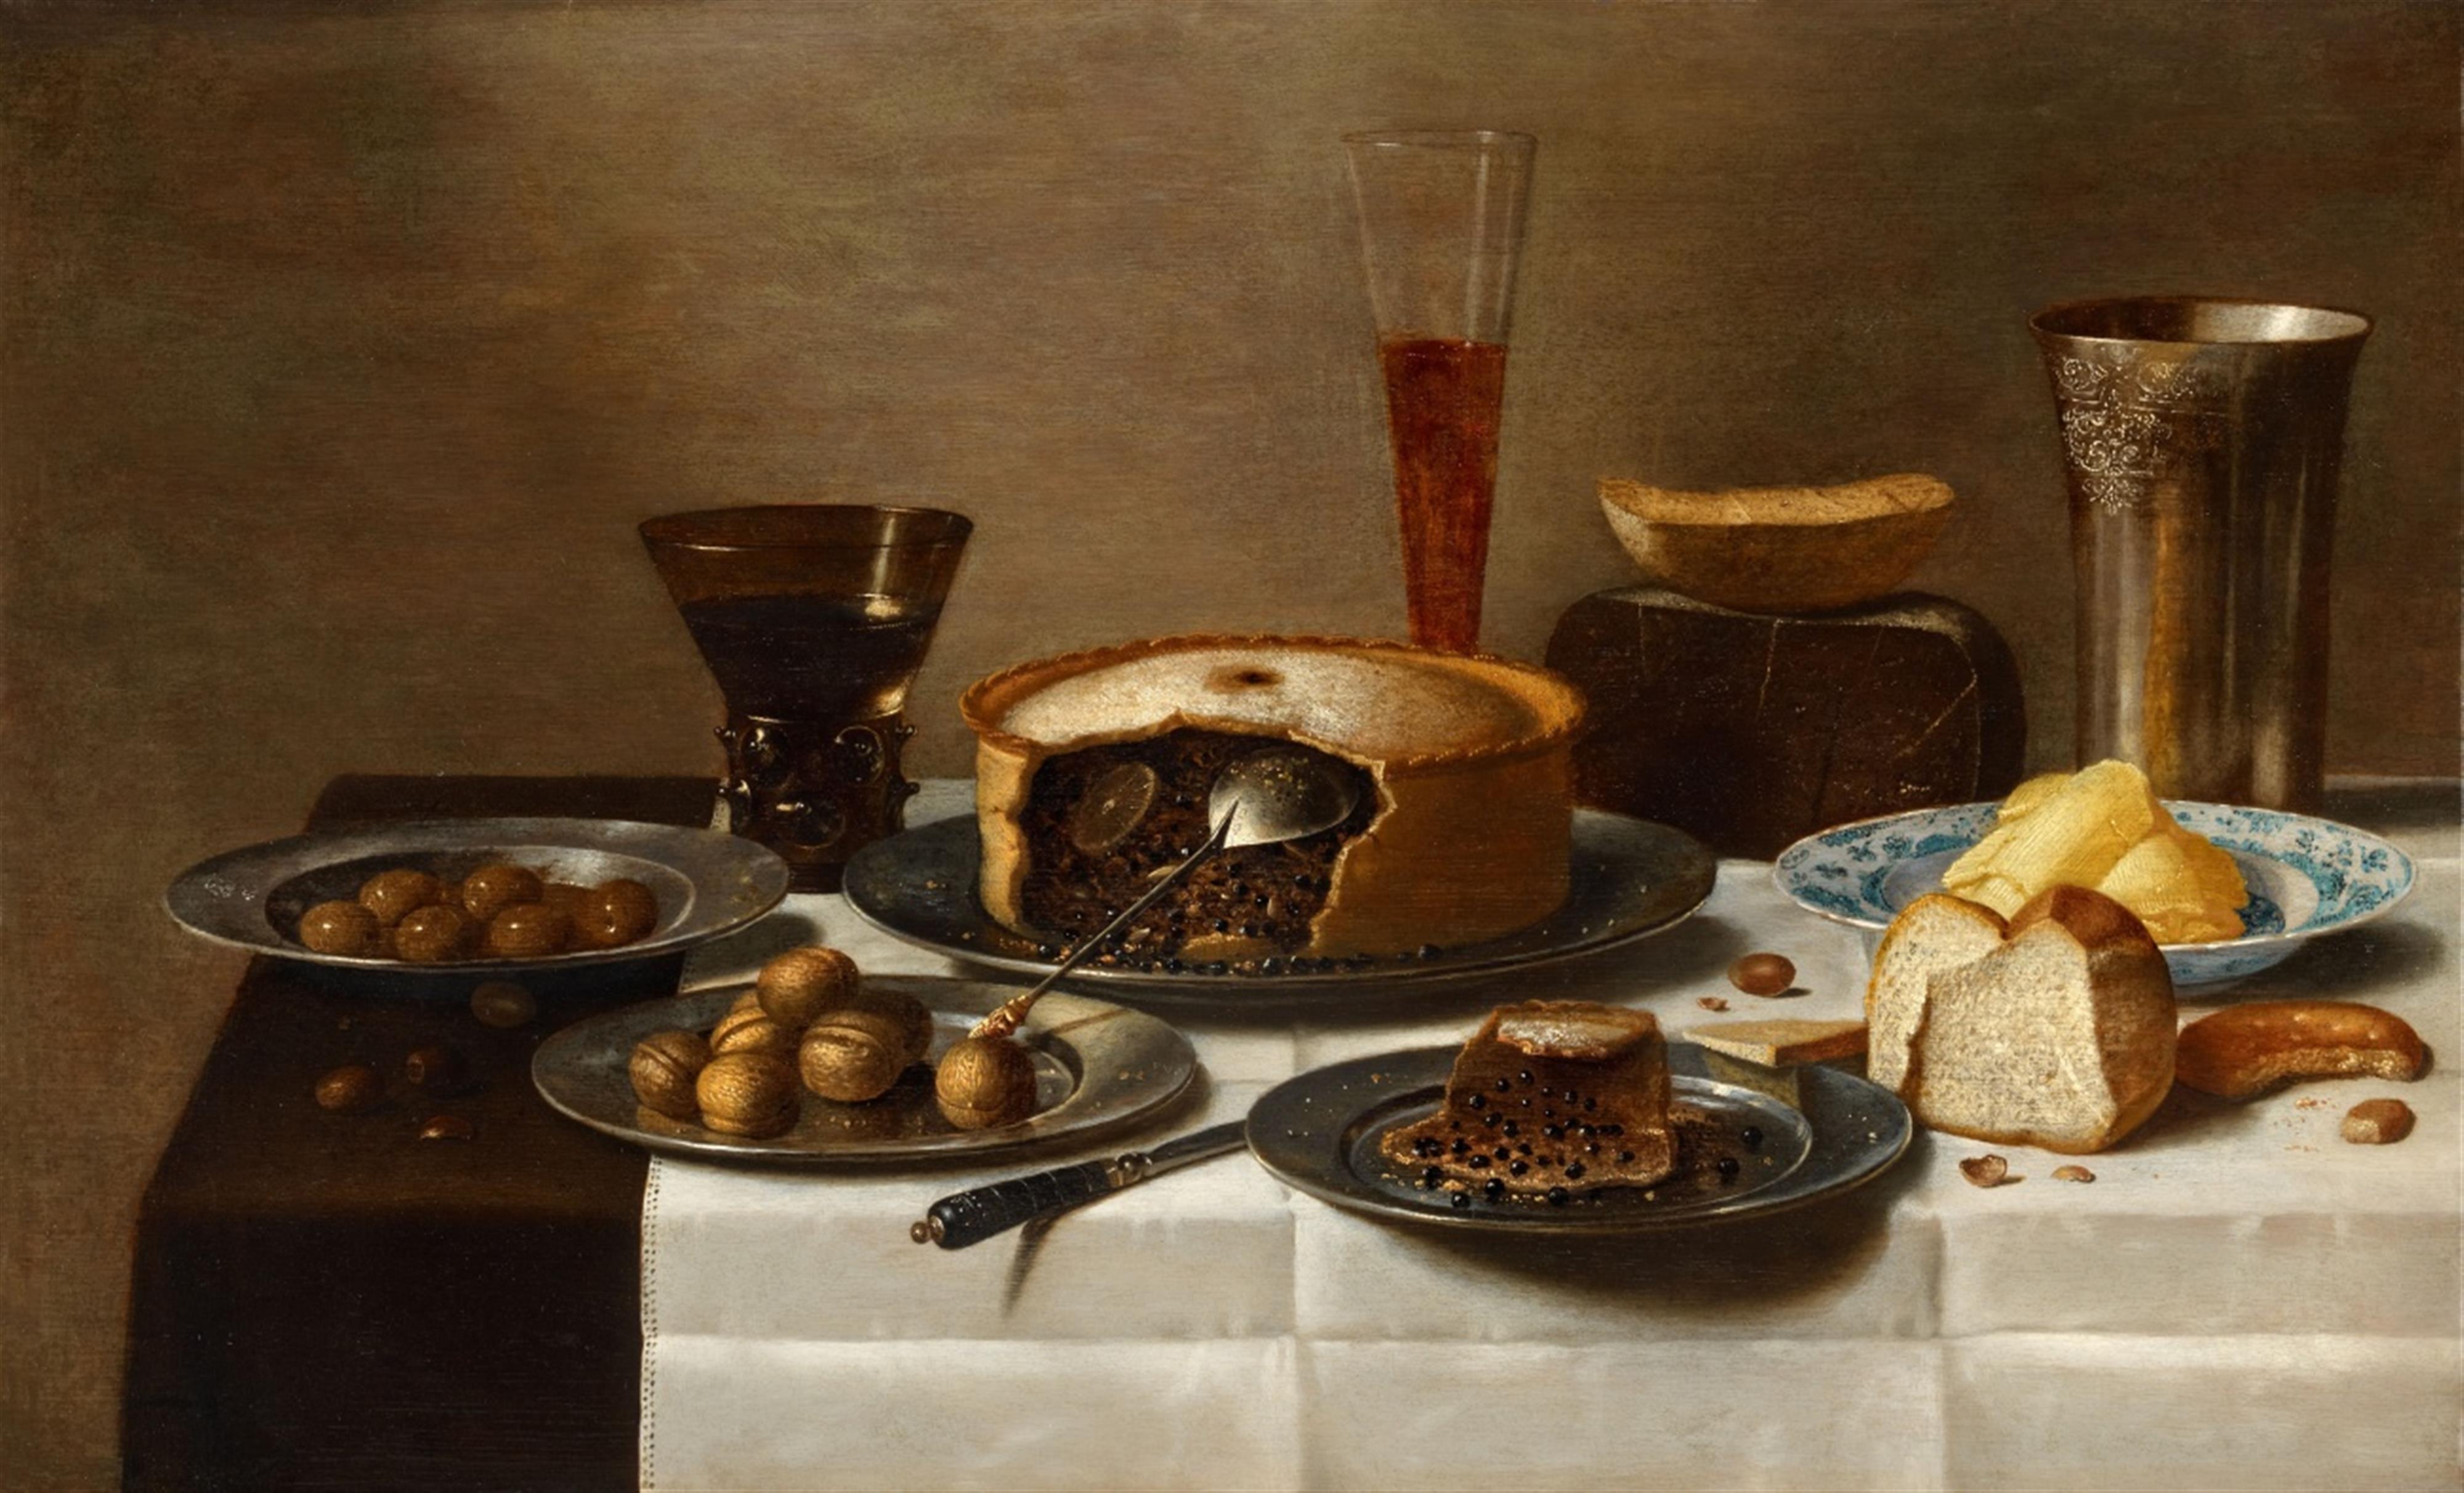 Floris van Schooten - Still Life with Sweetmeat, Bread, Nuts, and Vessels